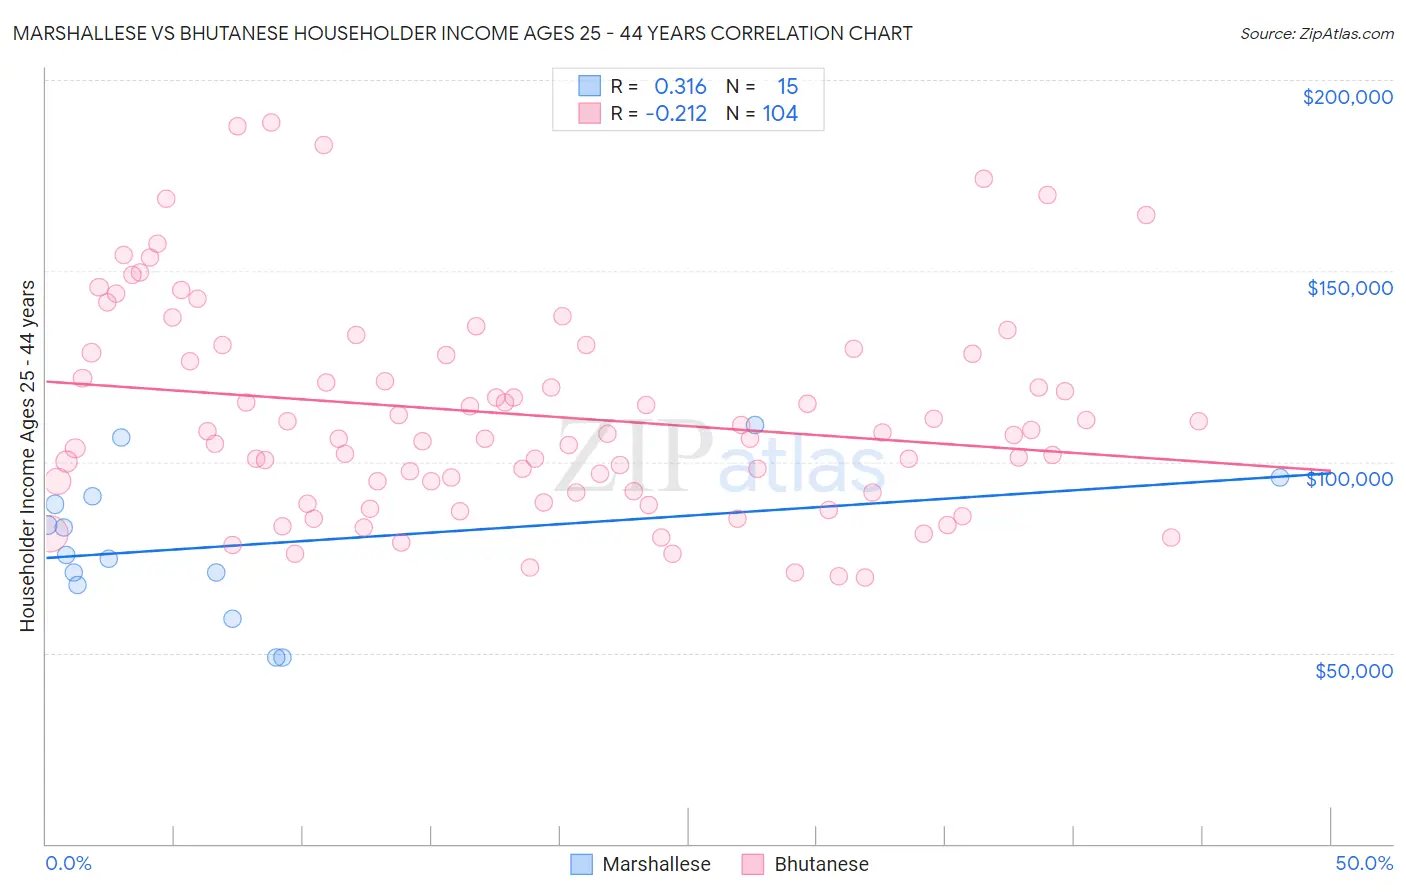 Marshallese vs Bhutanese Householder Income Ages 25 - 44 years